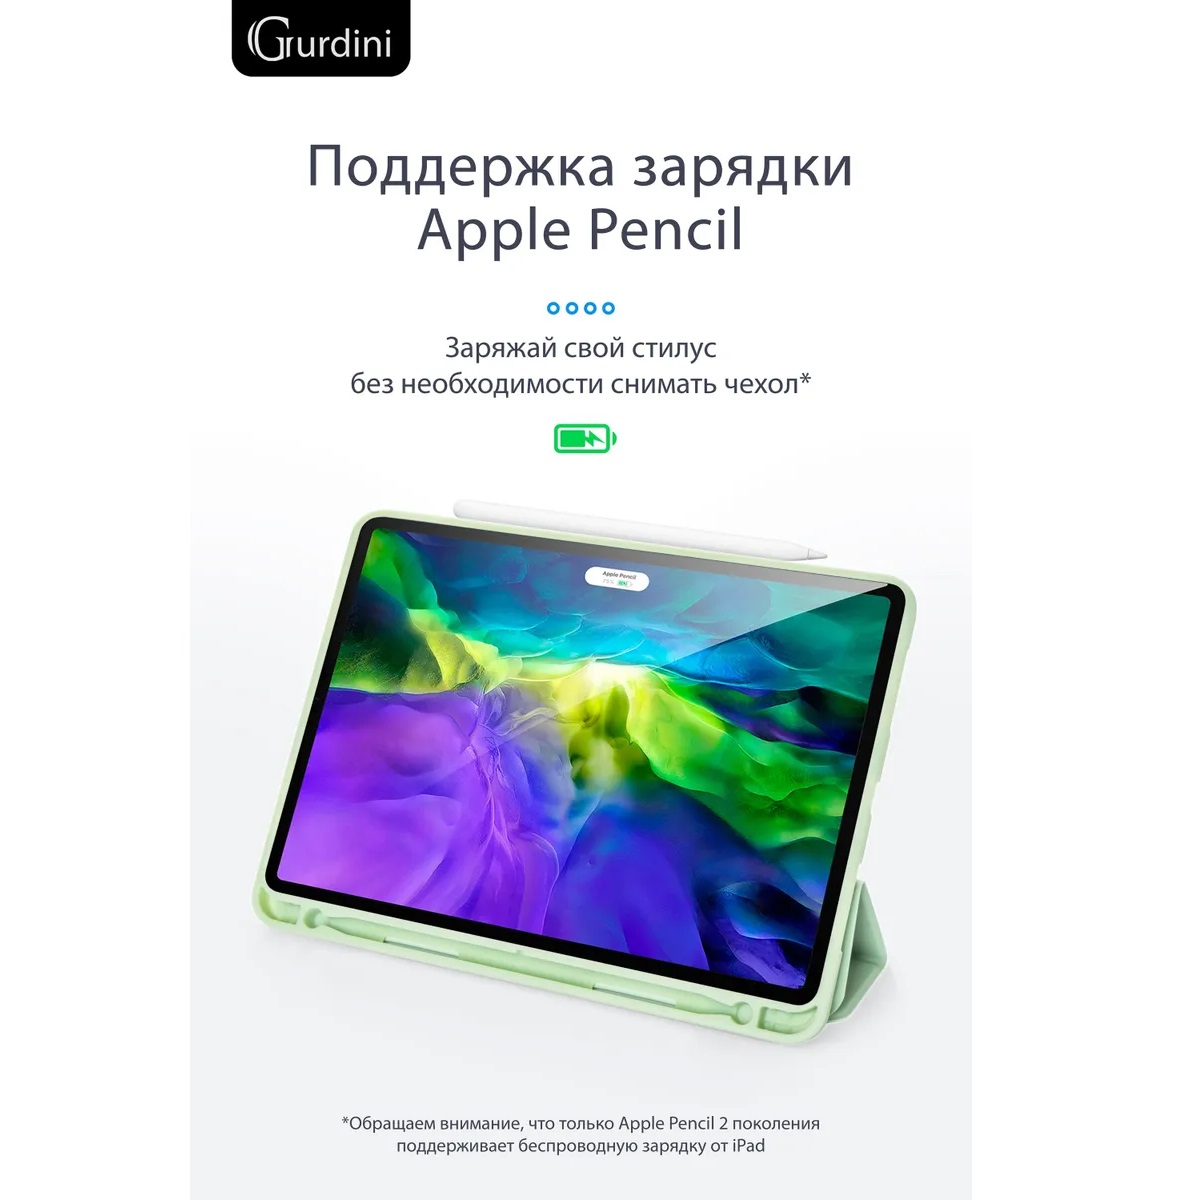 Чехол-книжка Gurdini Milano Series (pen slot) для iPad Pro 11 Green